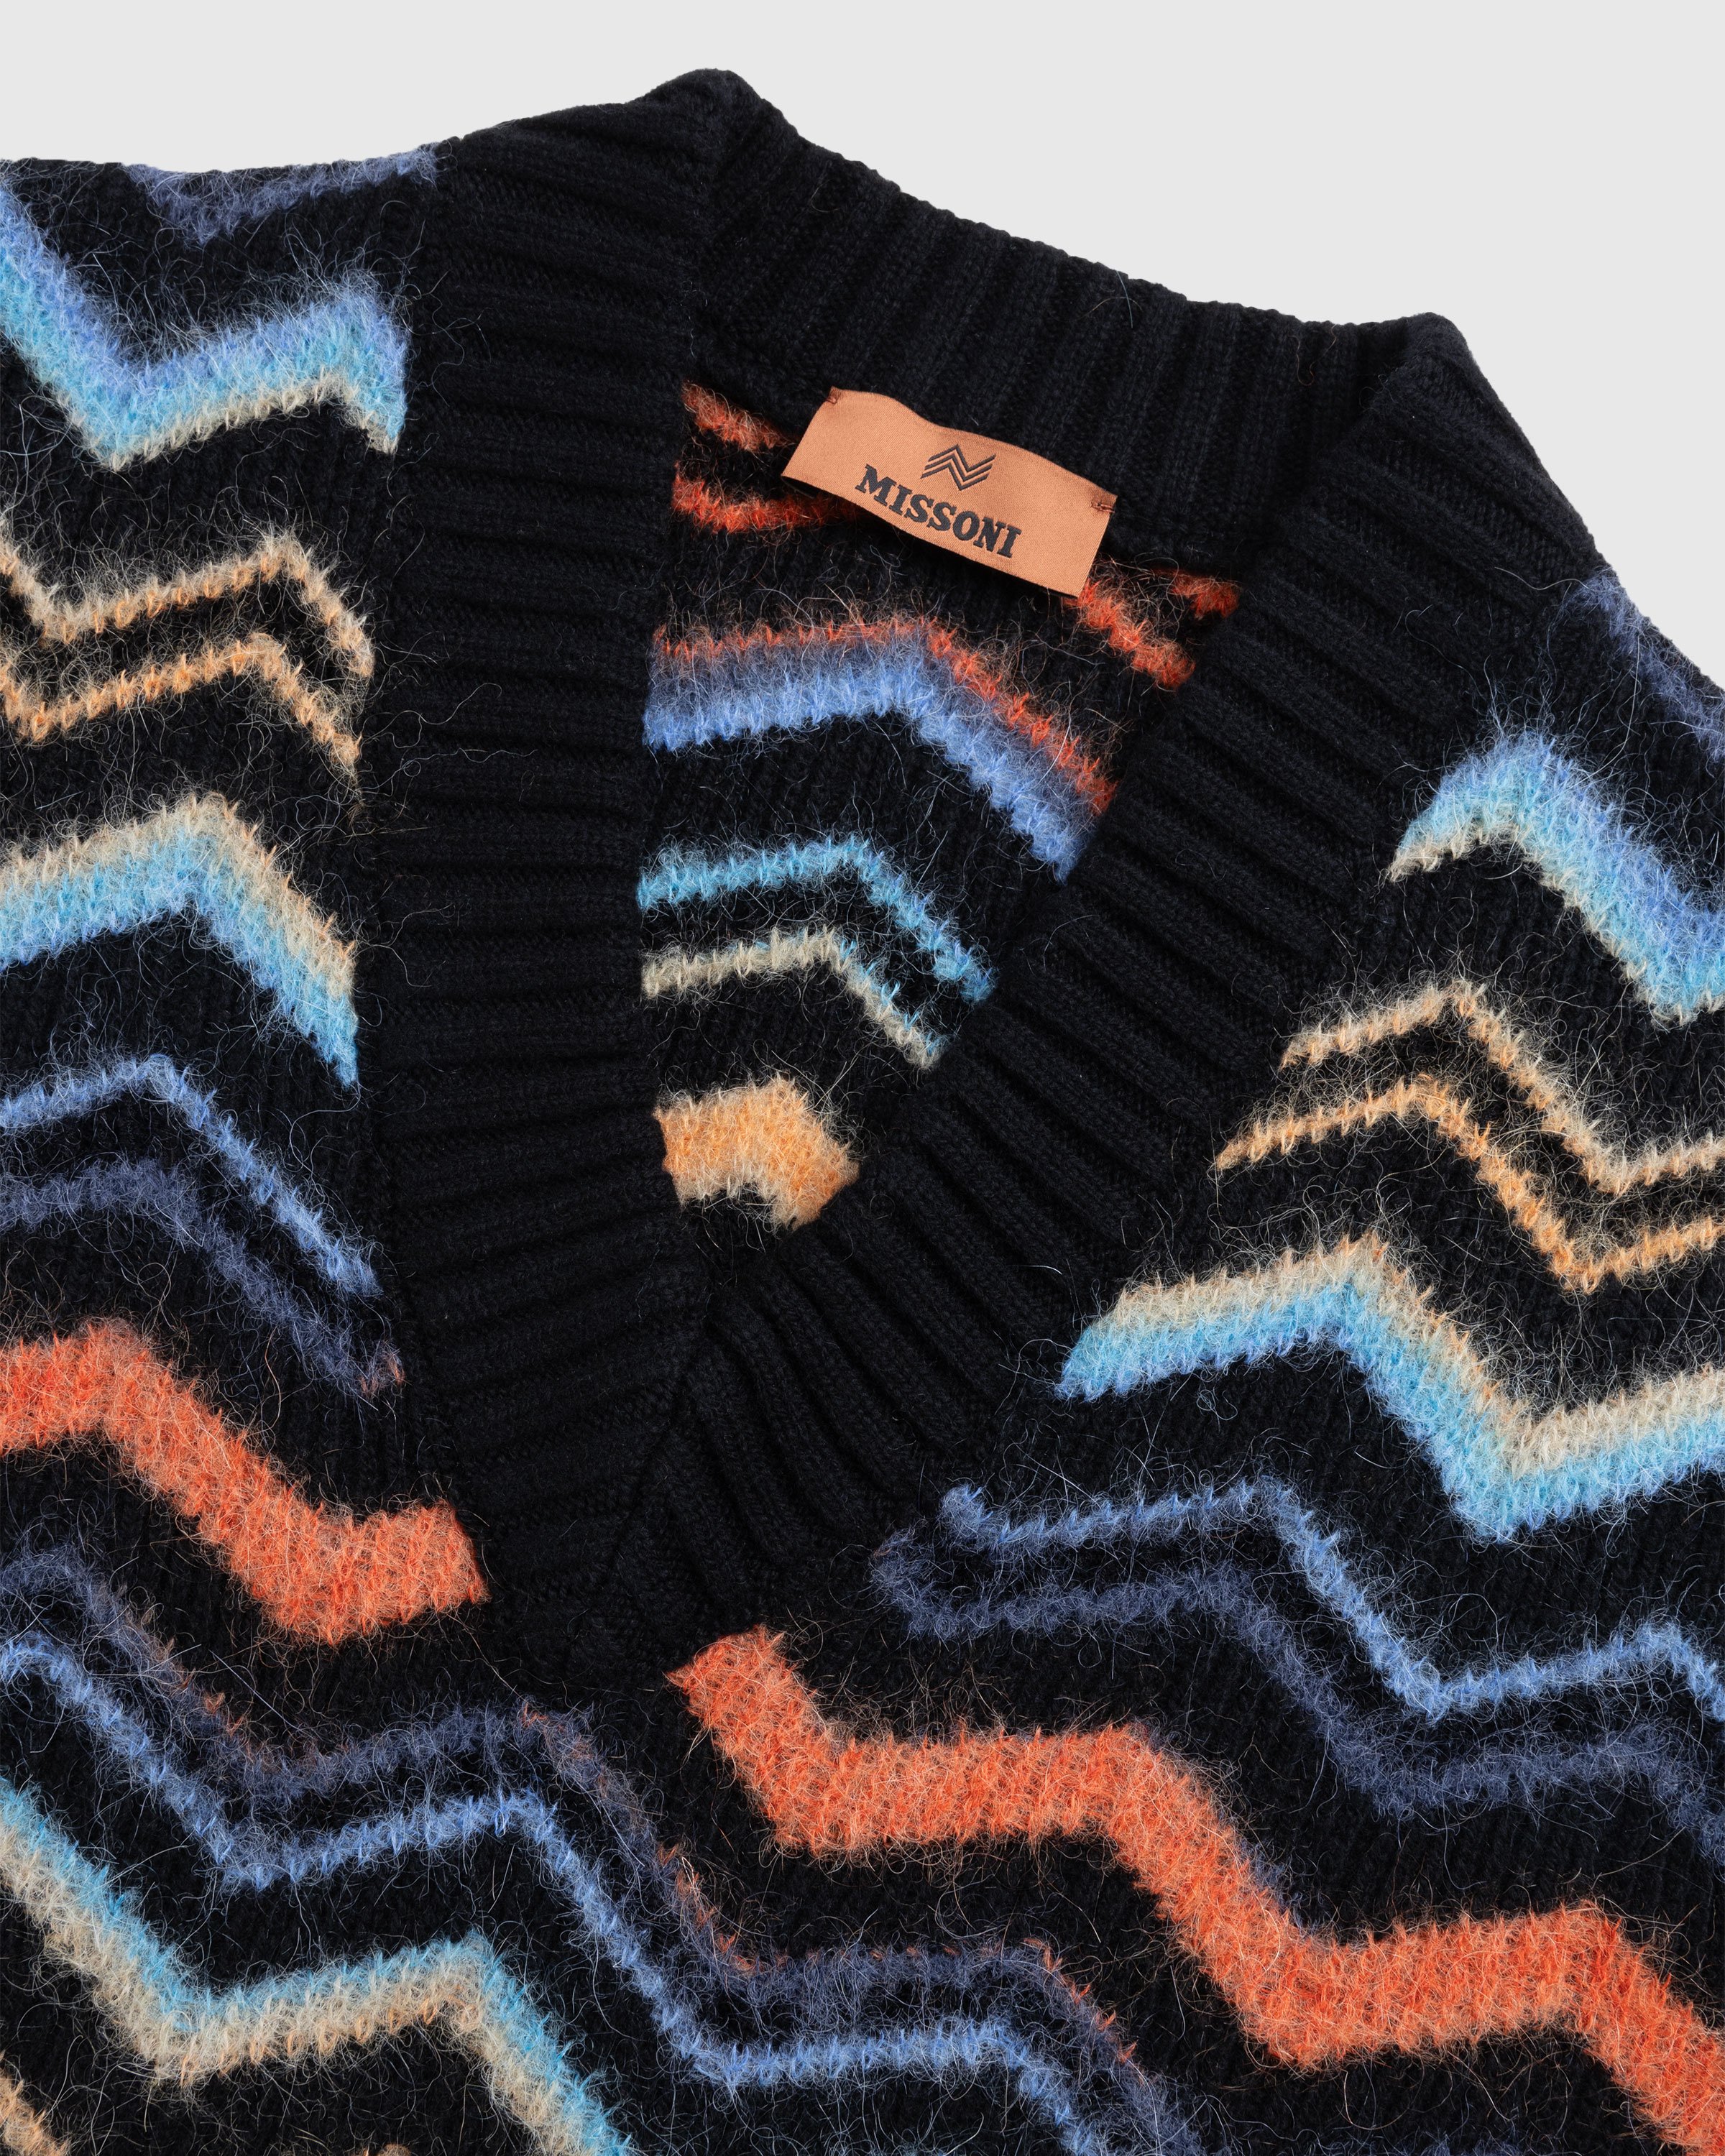 Missoni - Zig Zag Knit Vest Black/Orange/Light Blue - Clothing - Multi - Image 5